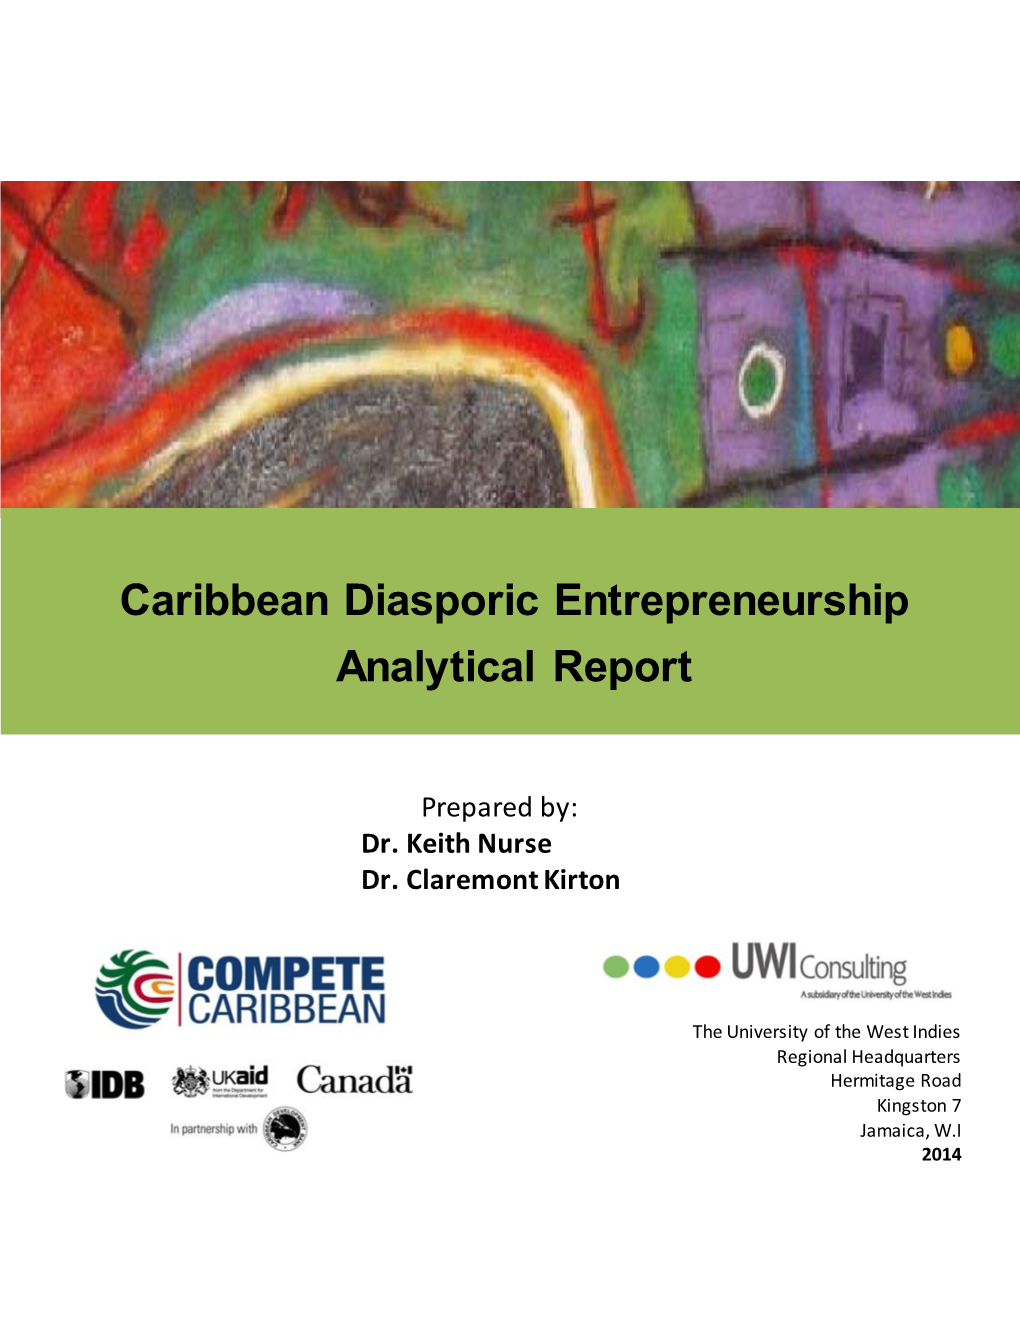 Caribbean Diasporic Entrepreneurship Analytical Report